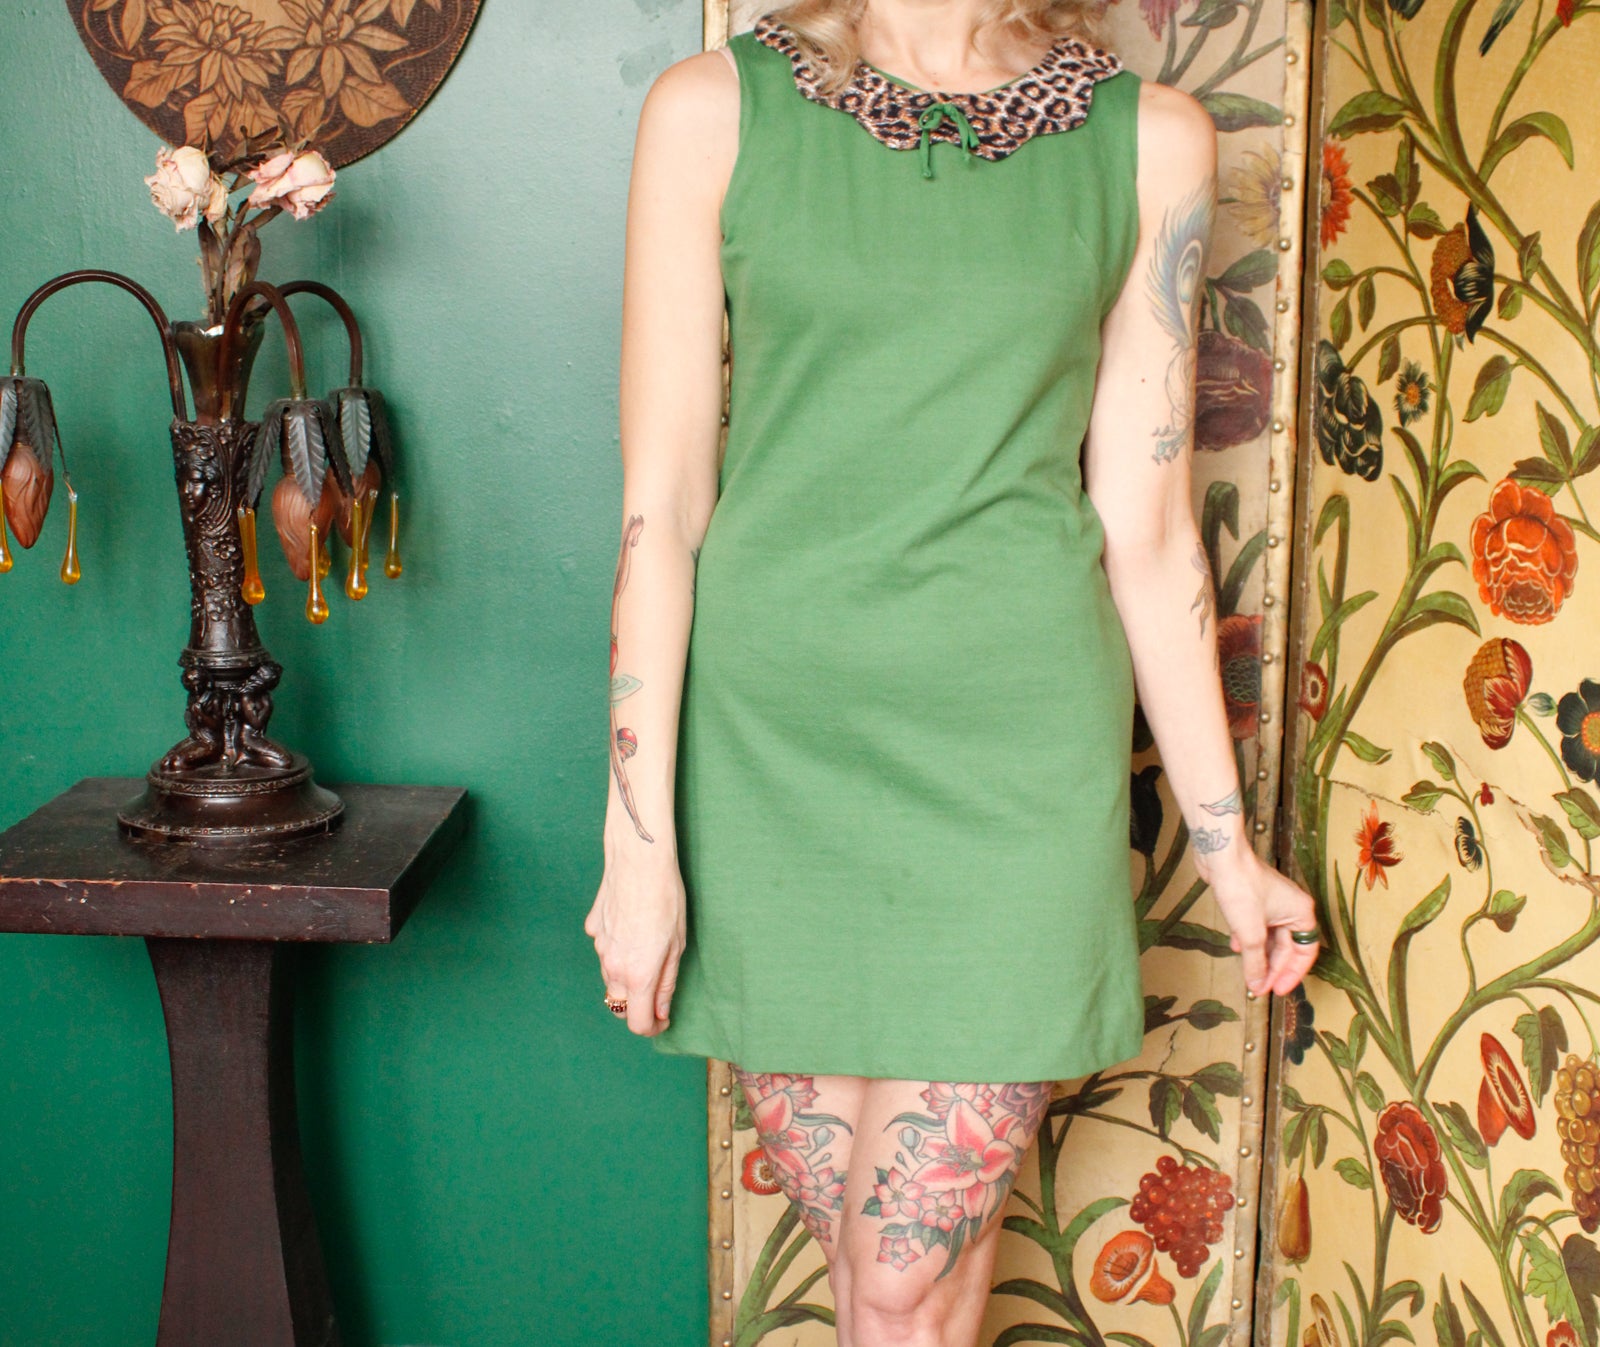 1960s Green Cotton Mini Dress with Cheetah Collar - Small